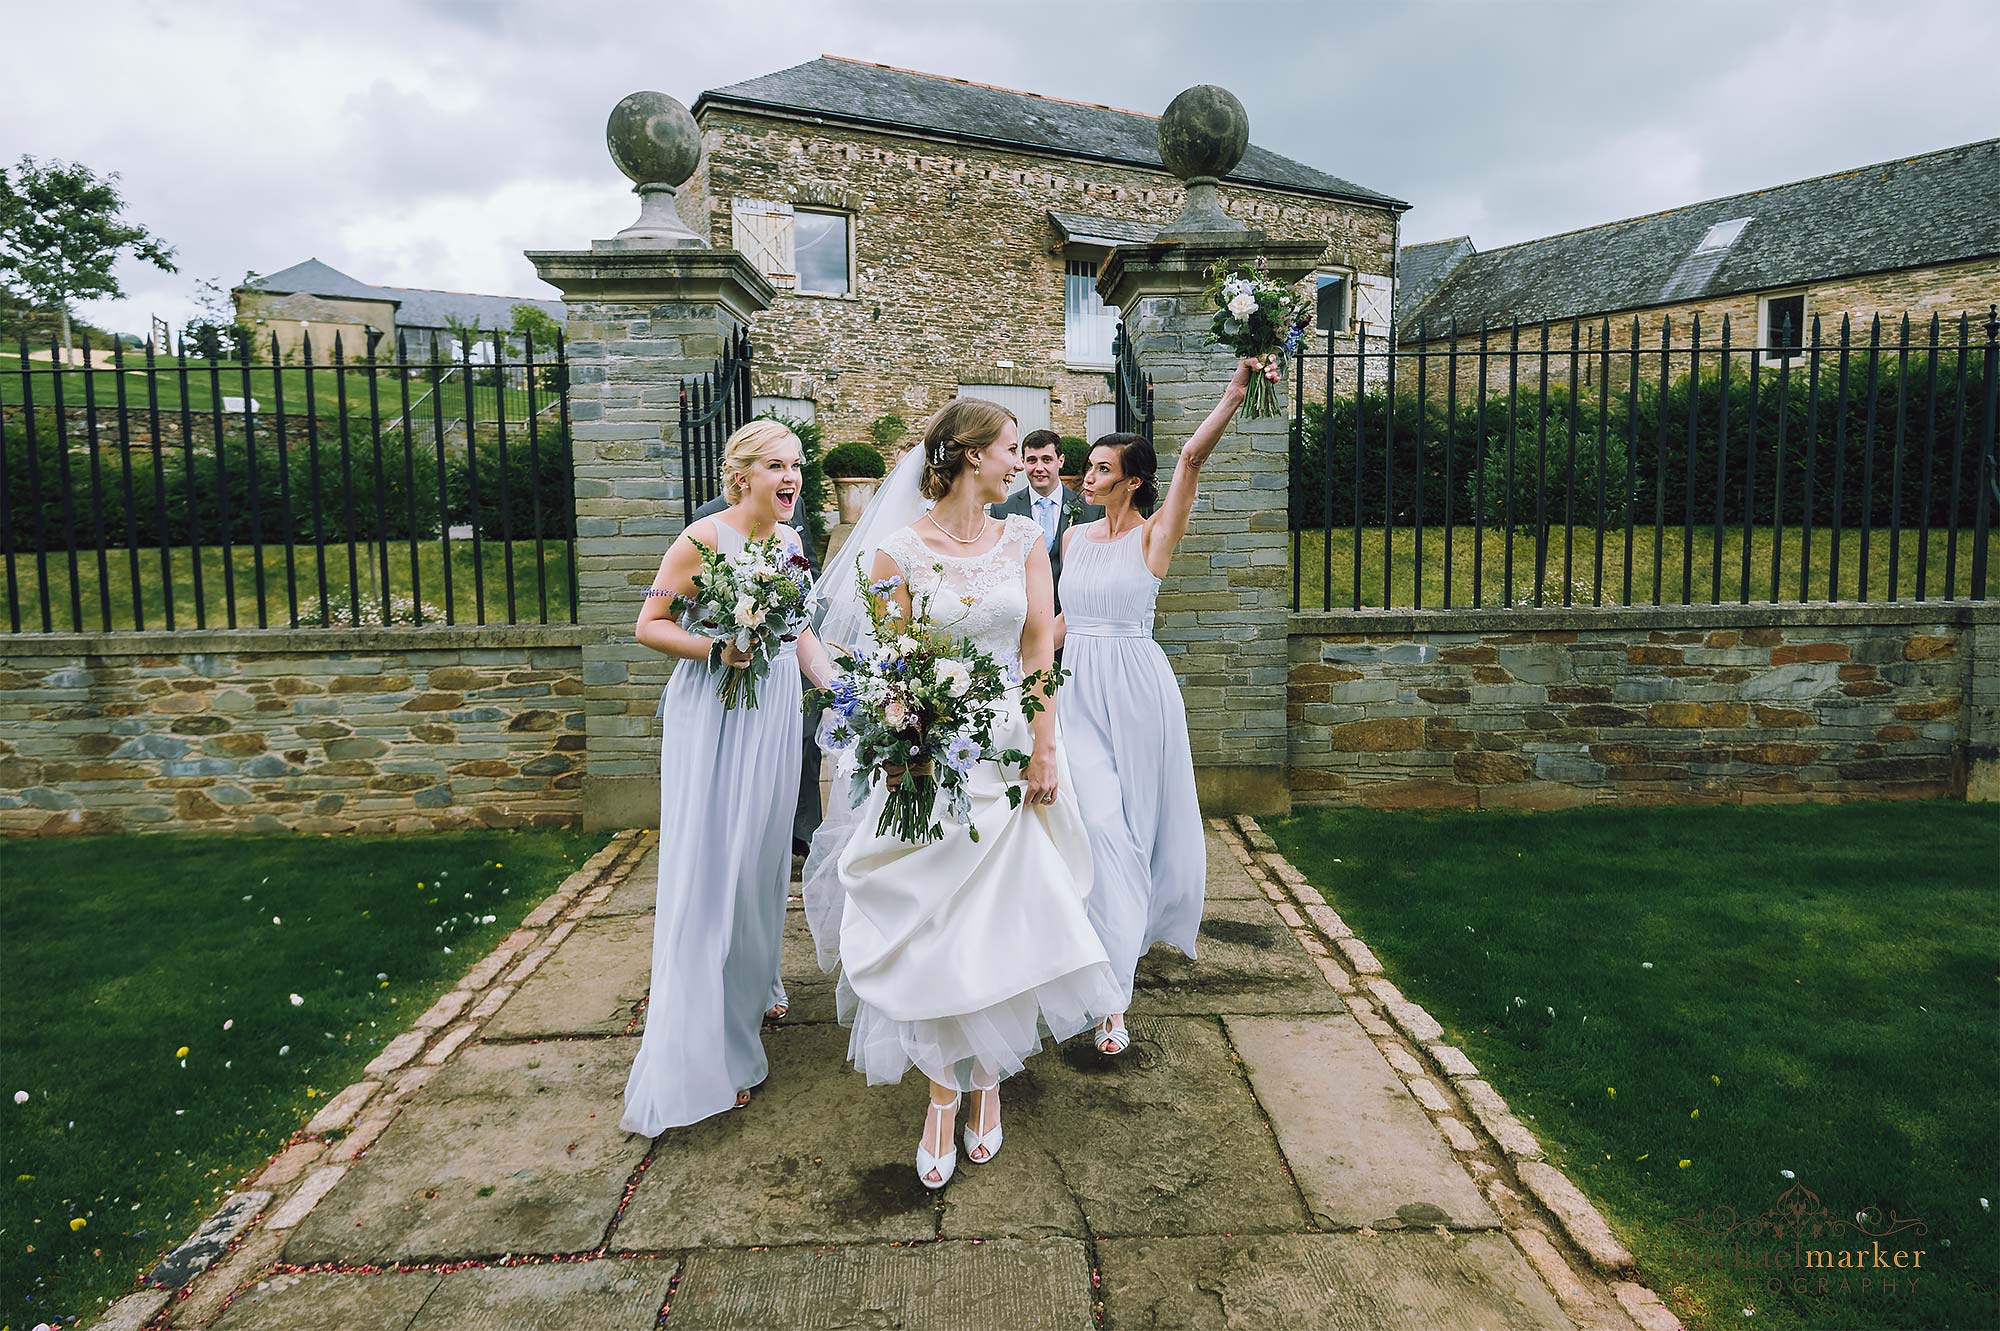 Bride and bridesmaids making an entrance at Shilstone House wedding